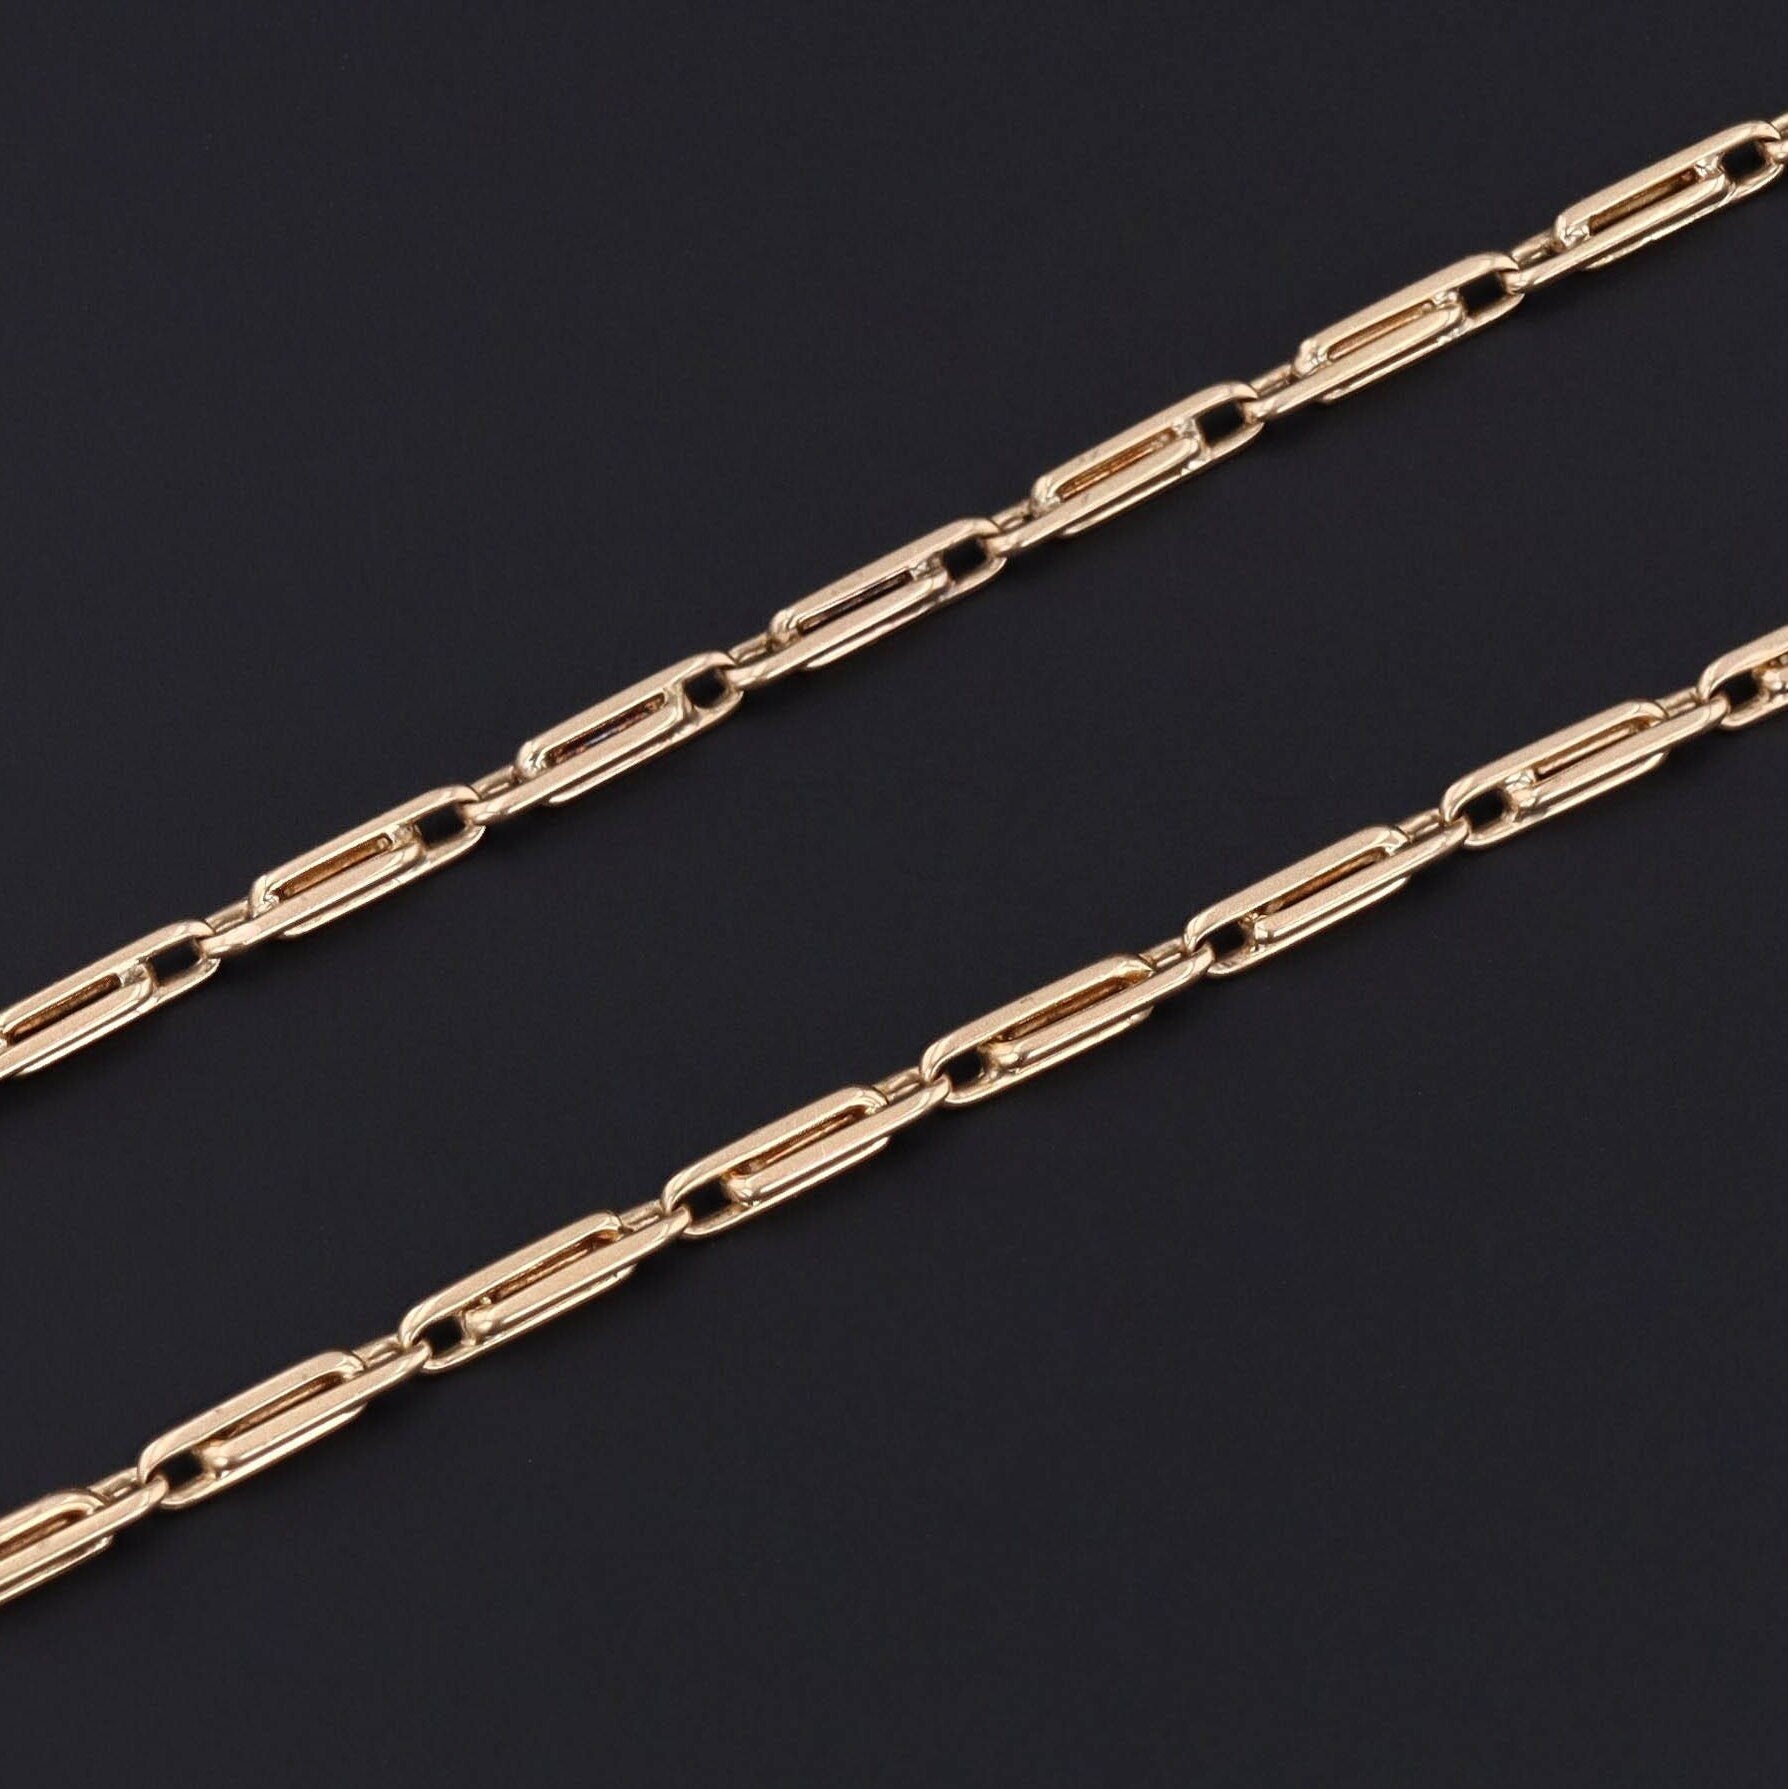 Watch Chain Necklace | Antique Watch Chain 